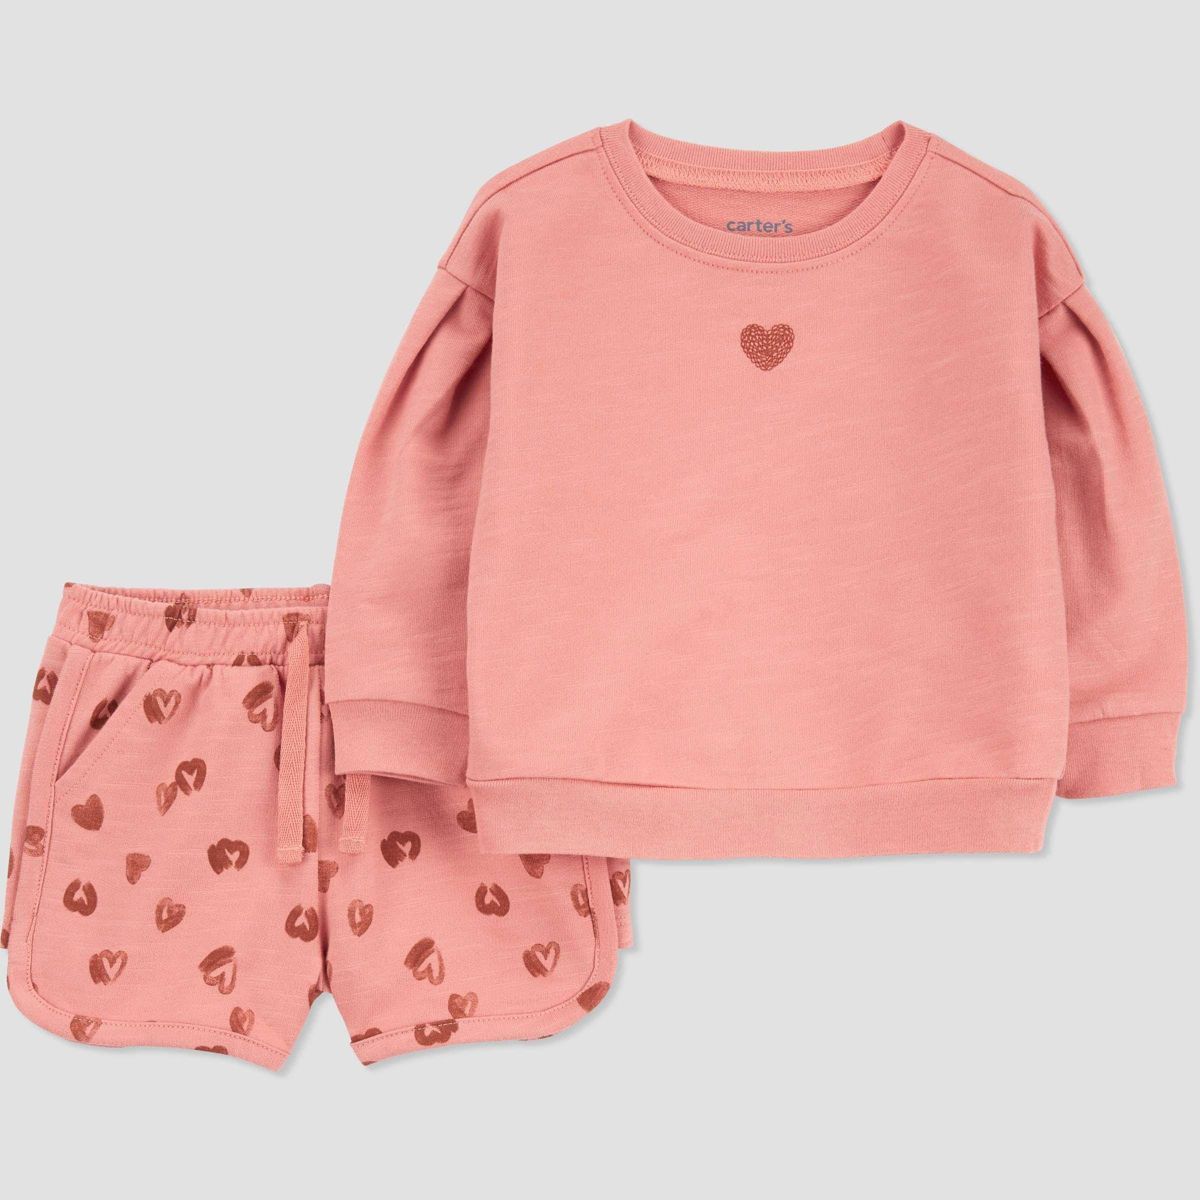 Carter's Just One You® Baby Girls' 2pc Cheetah Top & Shorts Set - Brown | Target